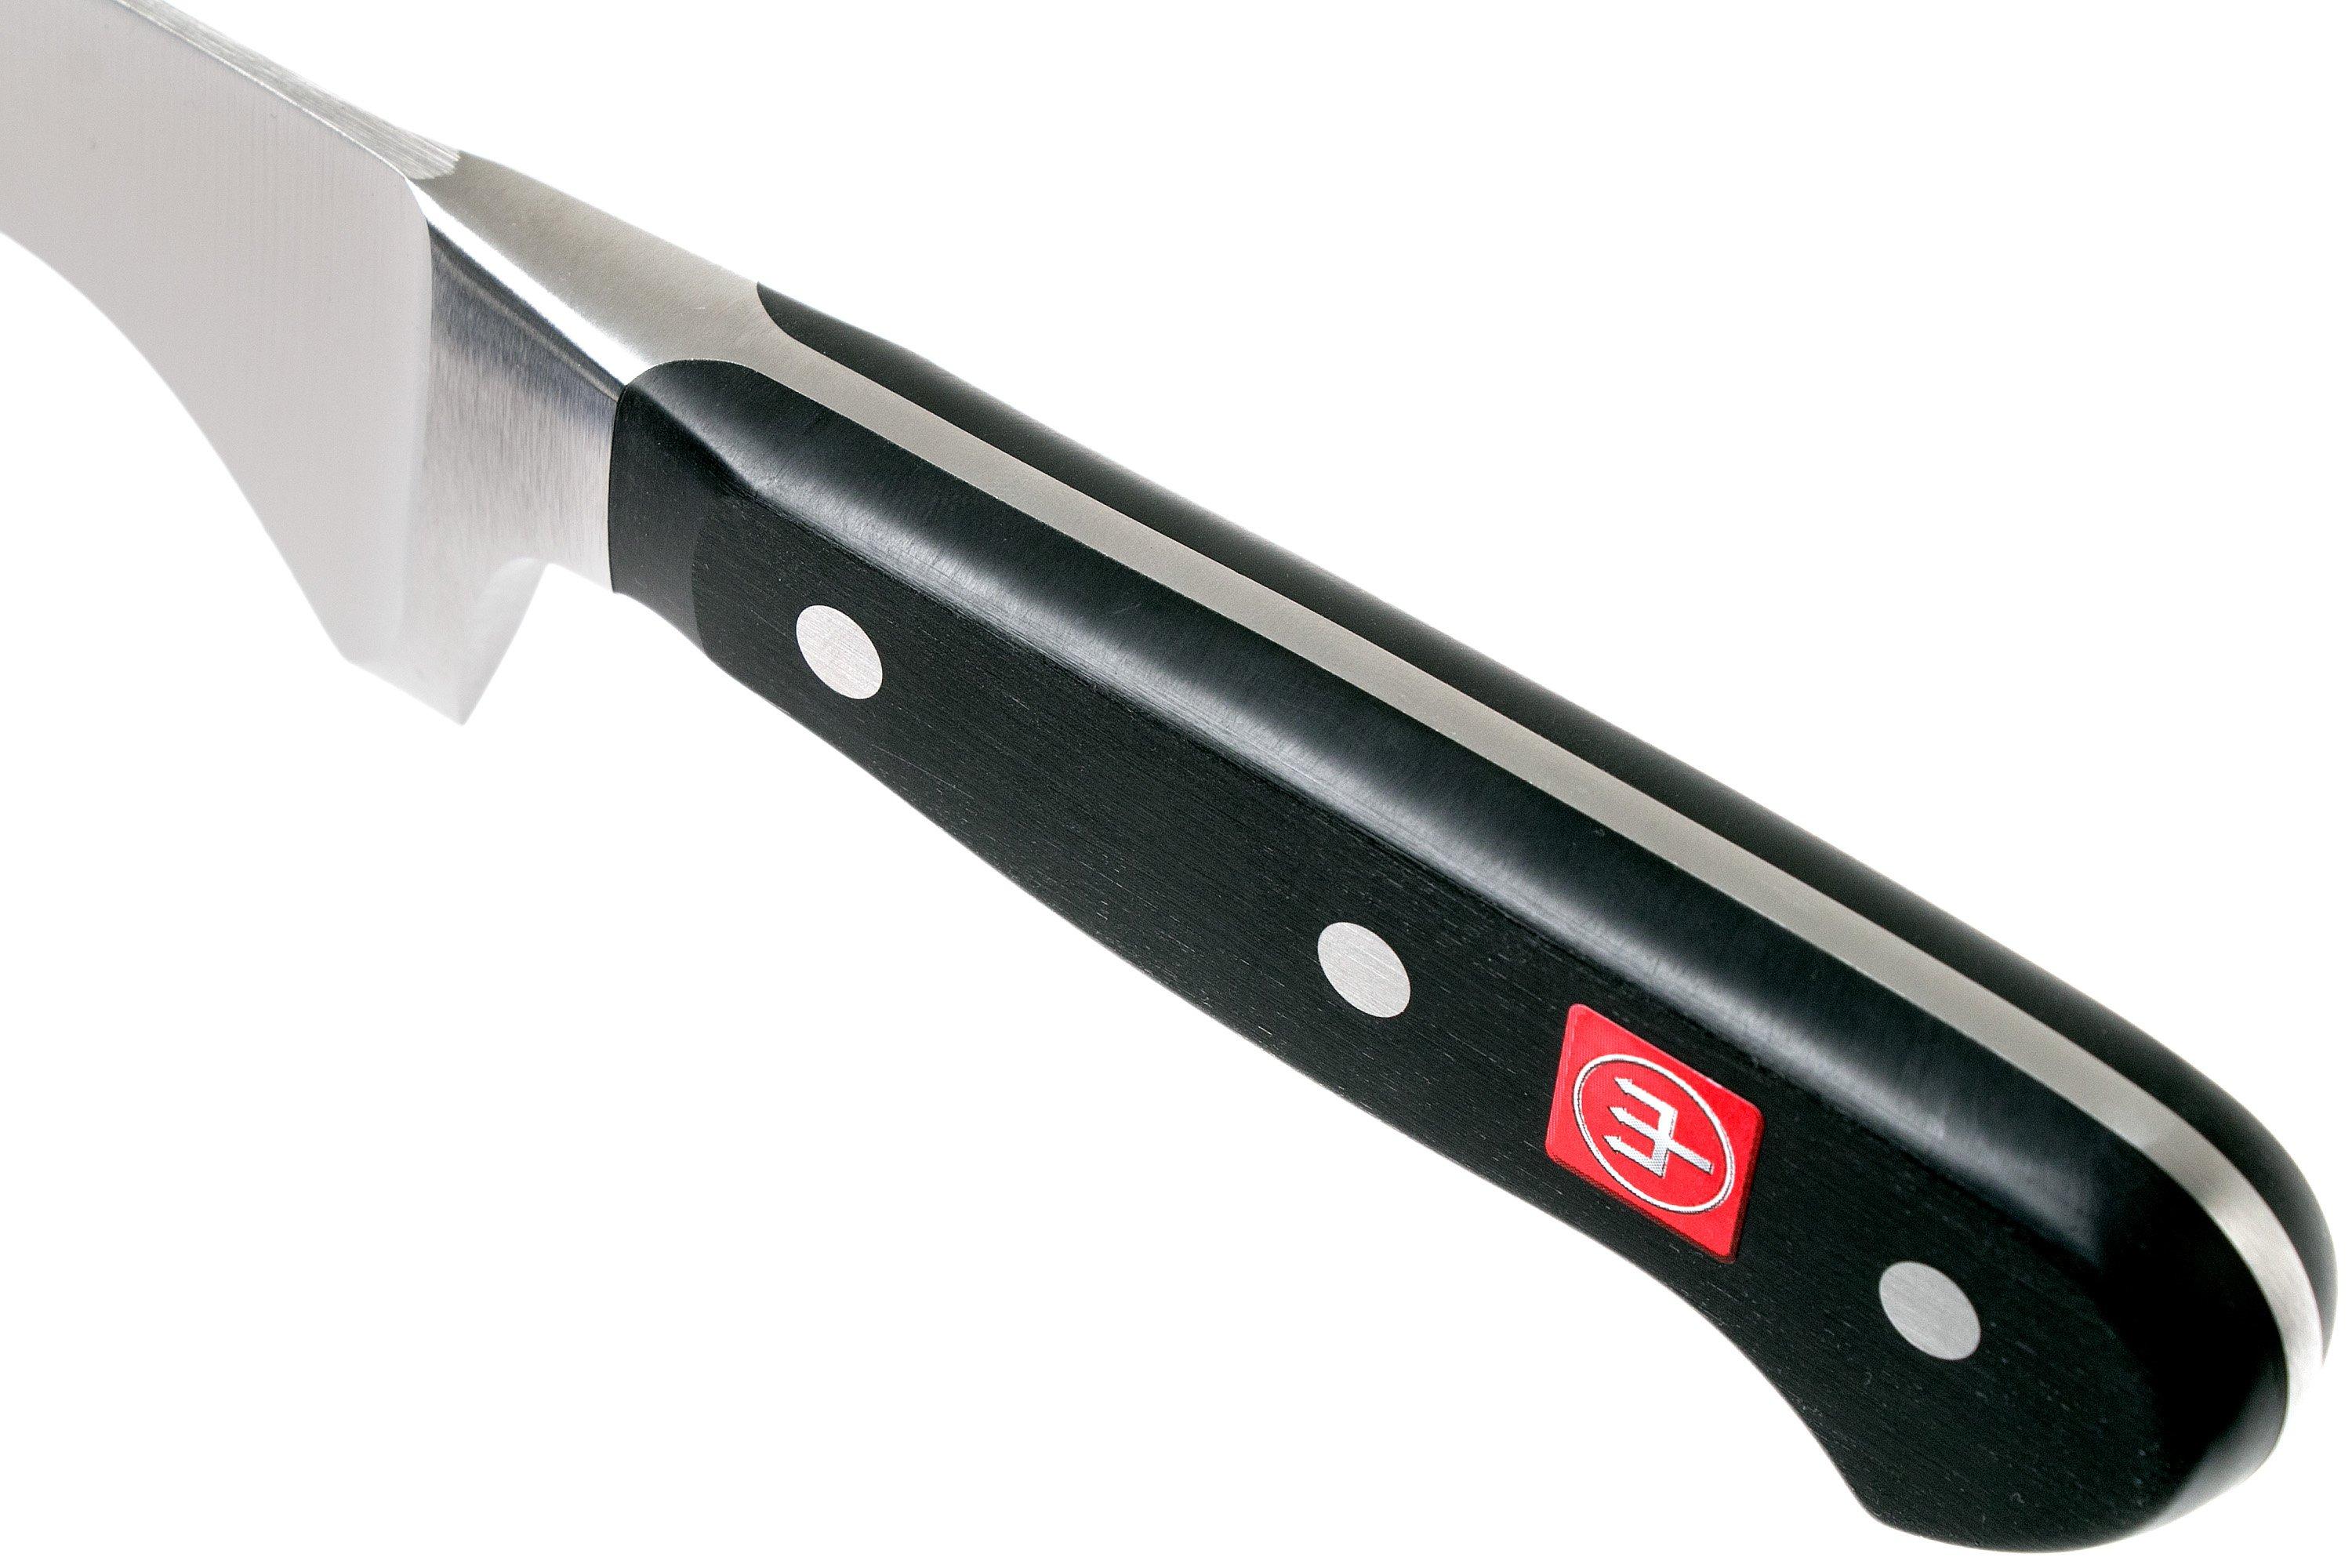 Wüsthof Classic butcher's knife 20 cm, 1040107120